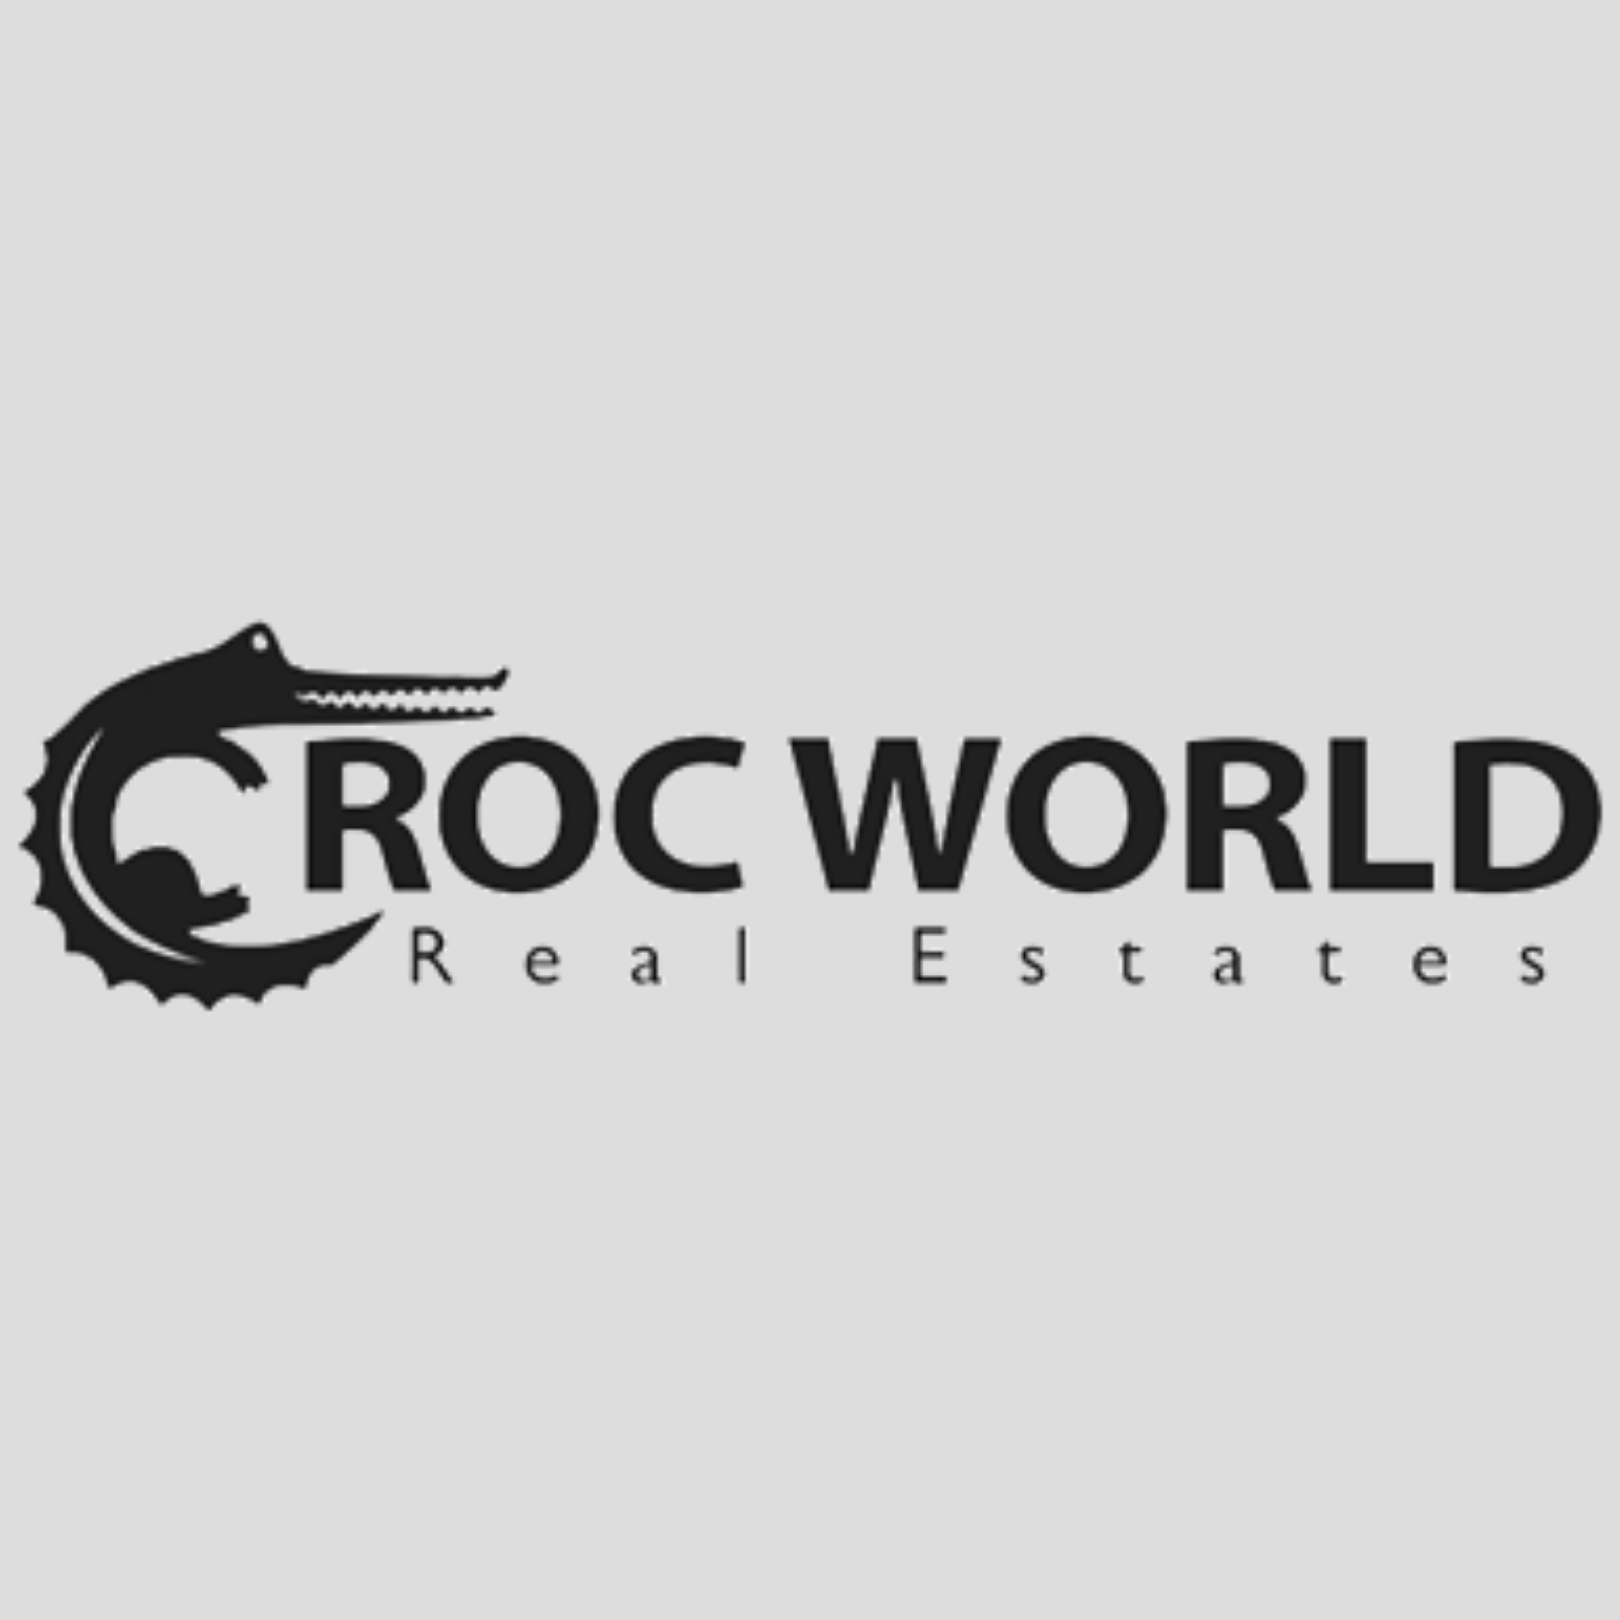 croc world real estates - Grey BG Logo